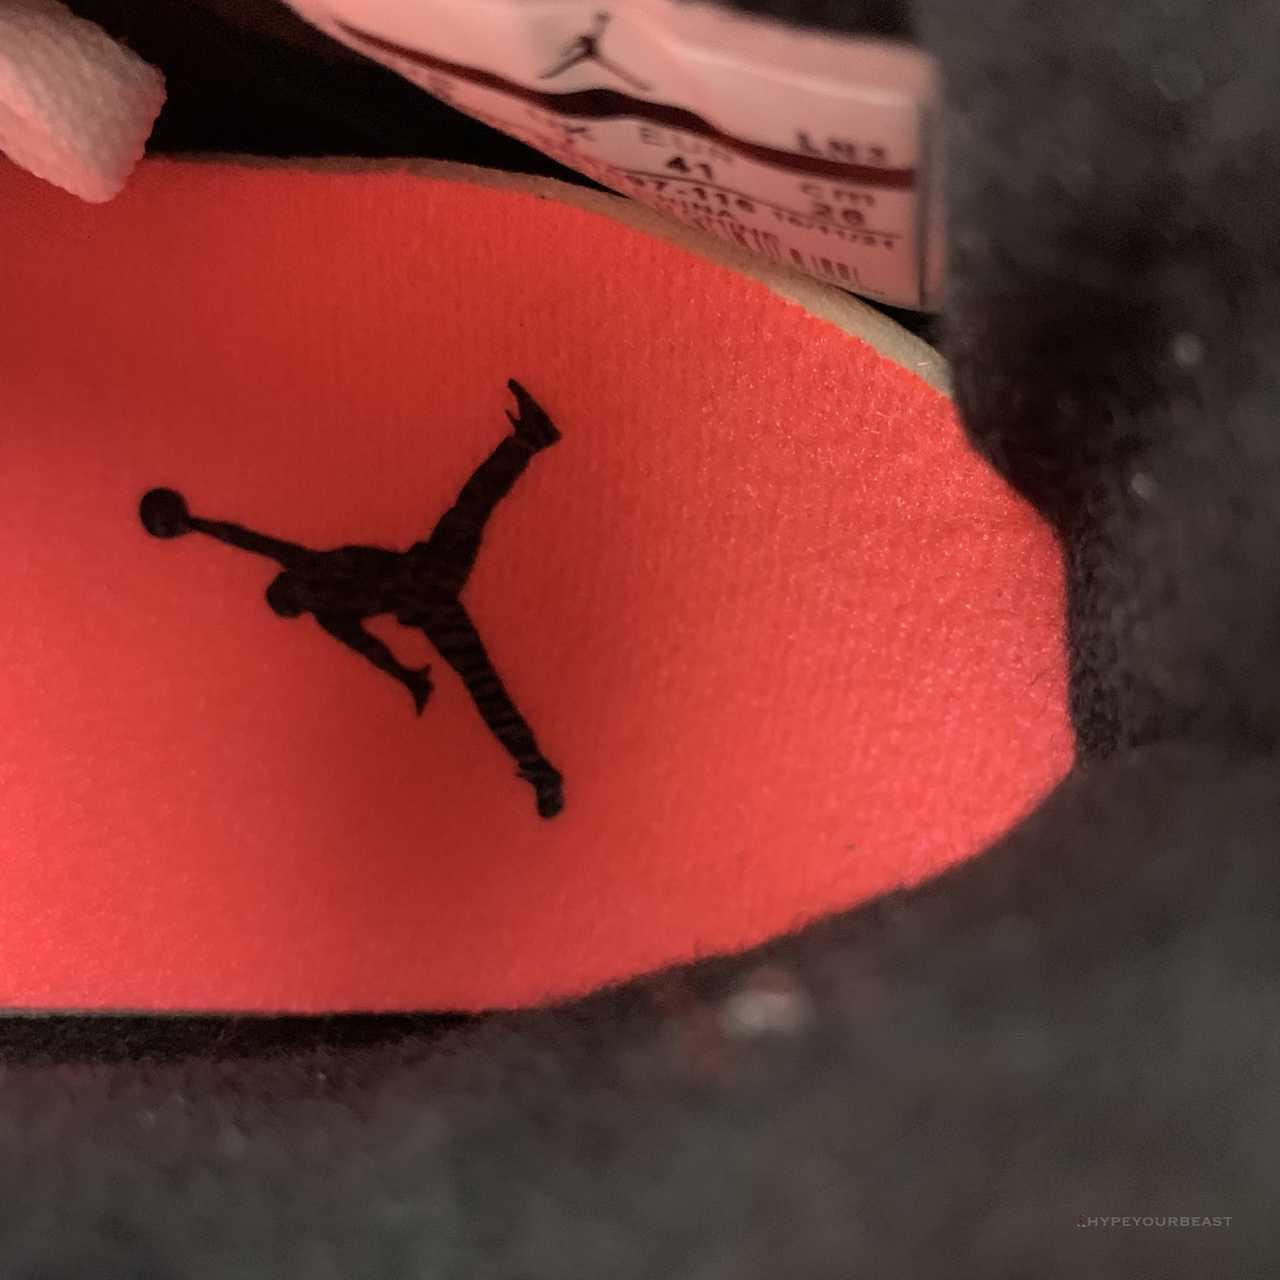 Air Jordan 4 'Crimson Tint'